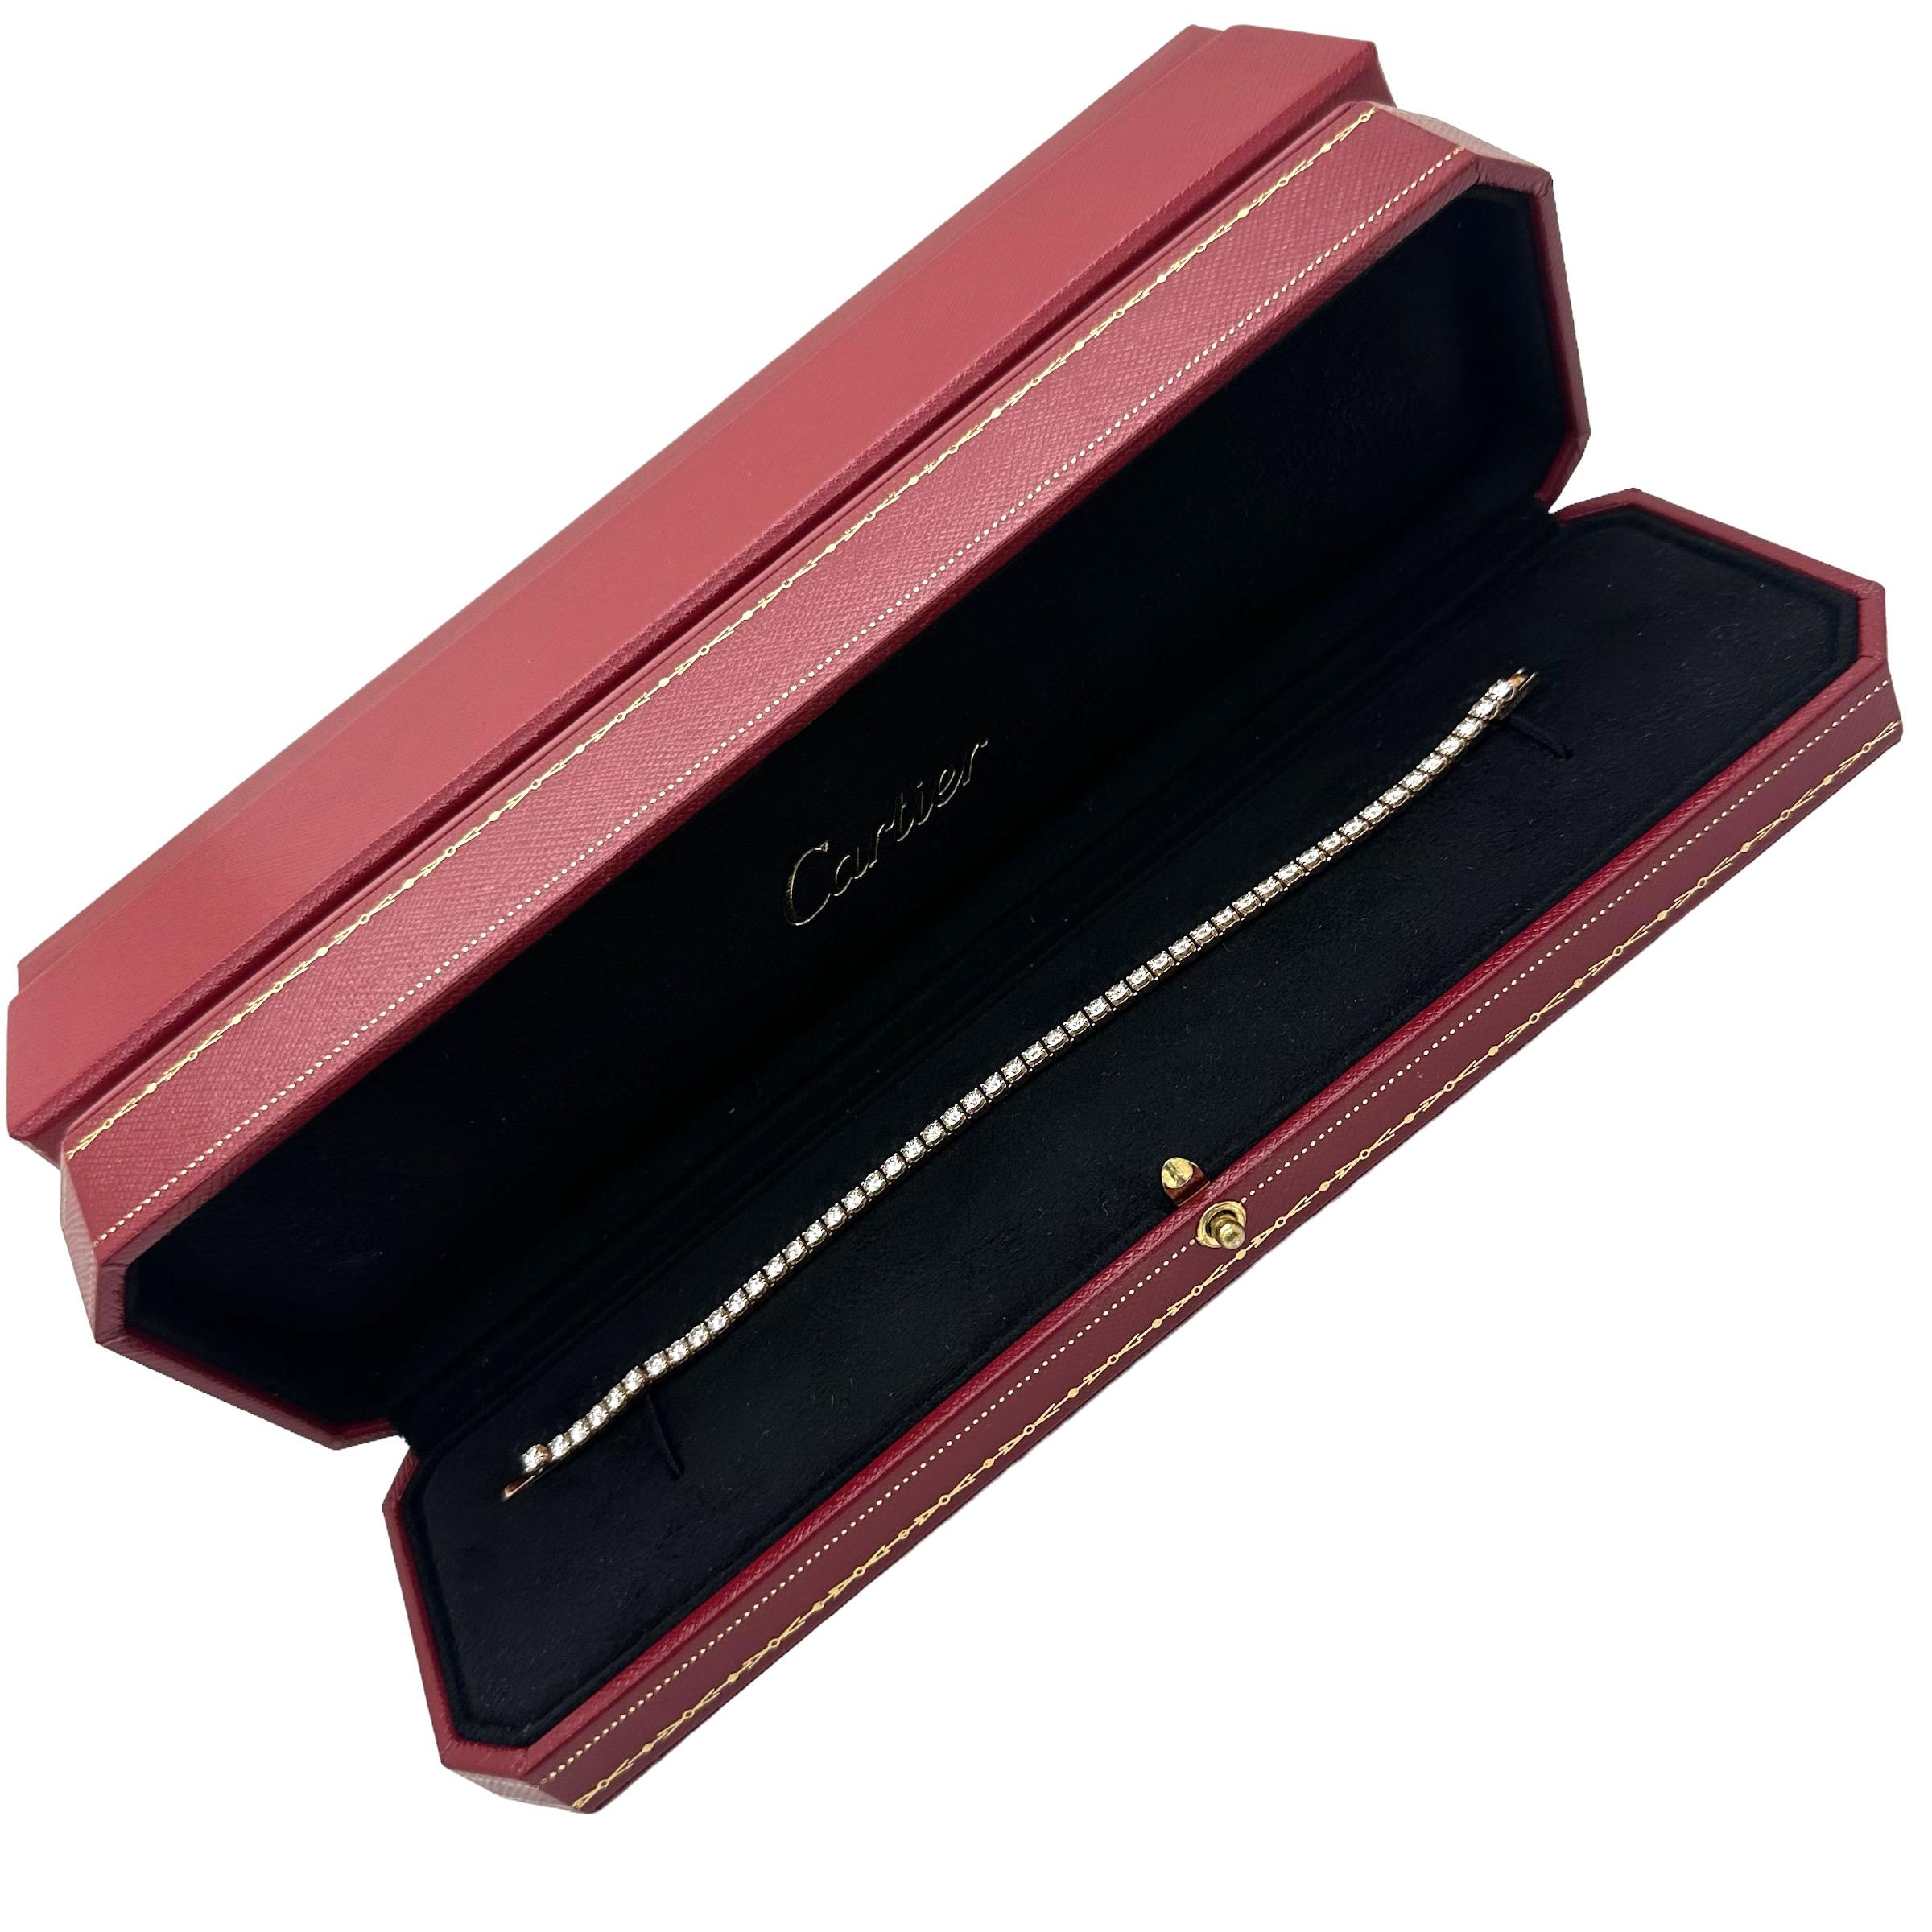 Cartier Essential Lines Diamond Tennis Bracelet
Style:  Tennis Bracelet
Ref. number:  CRN6708016
Metal:  18kt White Gold
Size:  6.75' Inches / 16.75 cm 
Measurements:  3.40 mm width
TCW:  4.41 tcw
Main Diamond:  49 Round Brilliant Diamonds
Hallmark: